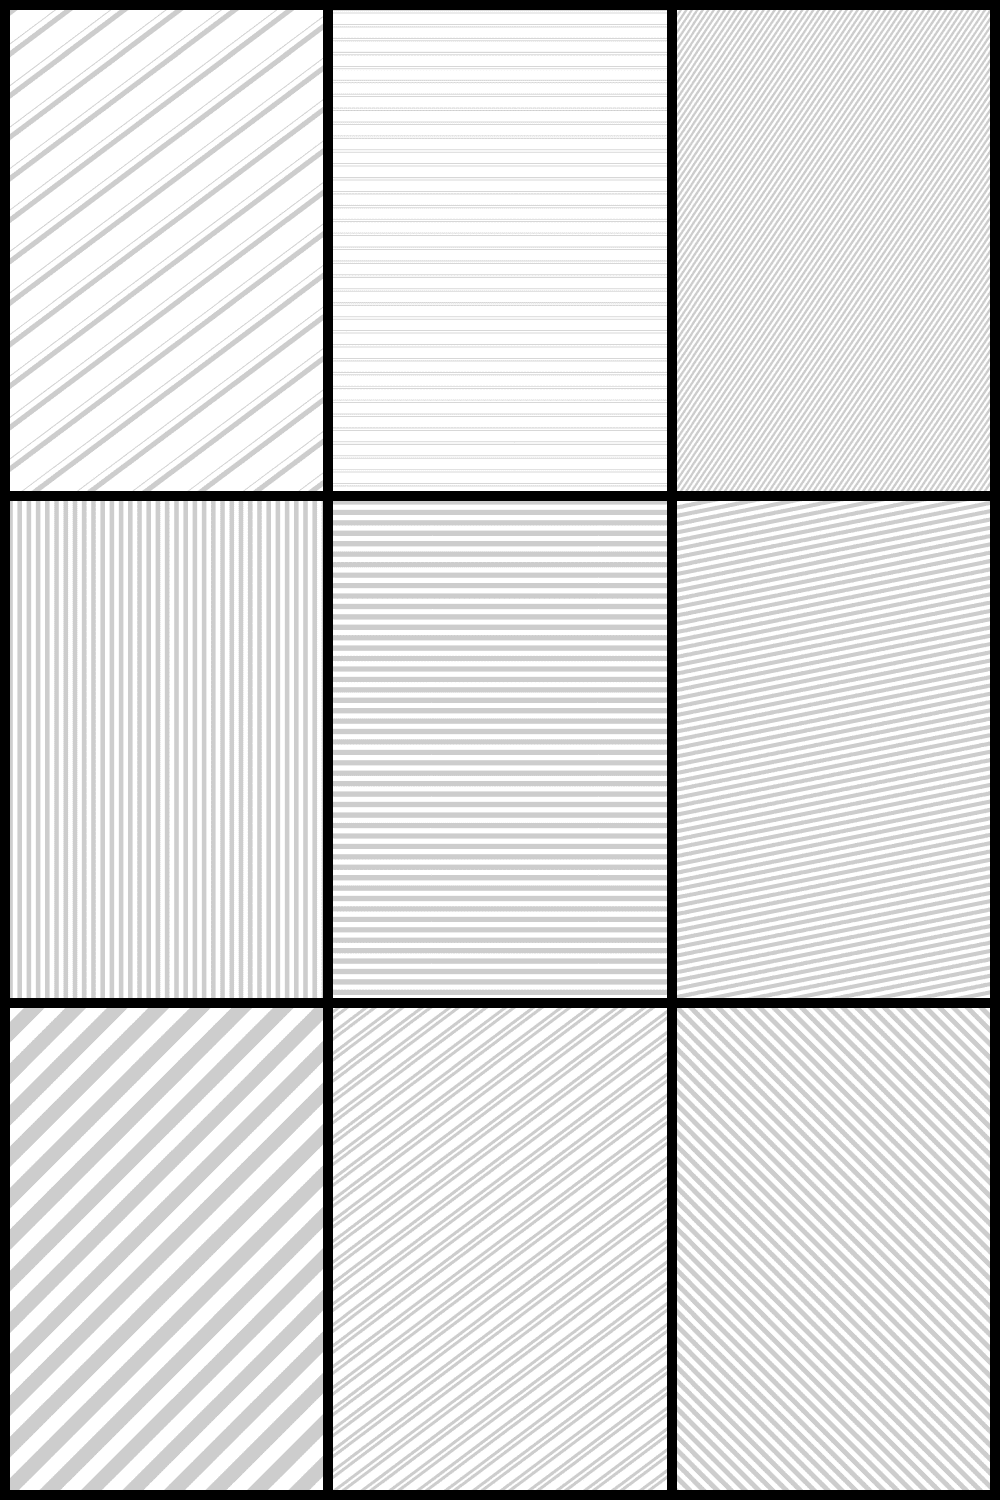 Striped Seamless Patterns.